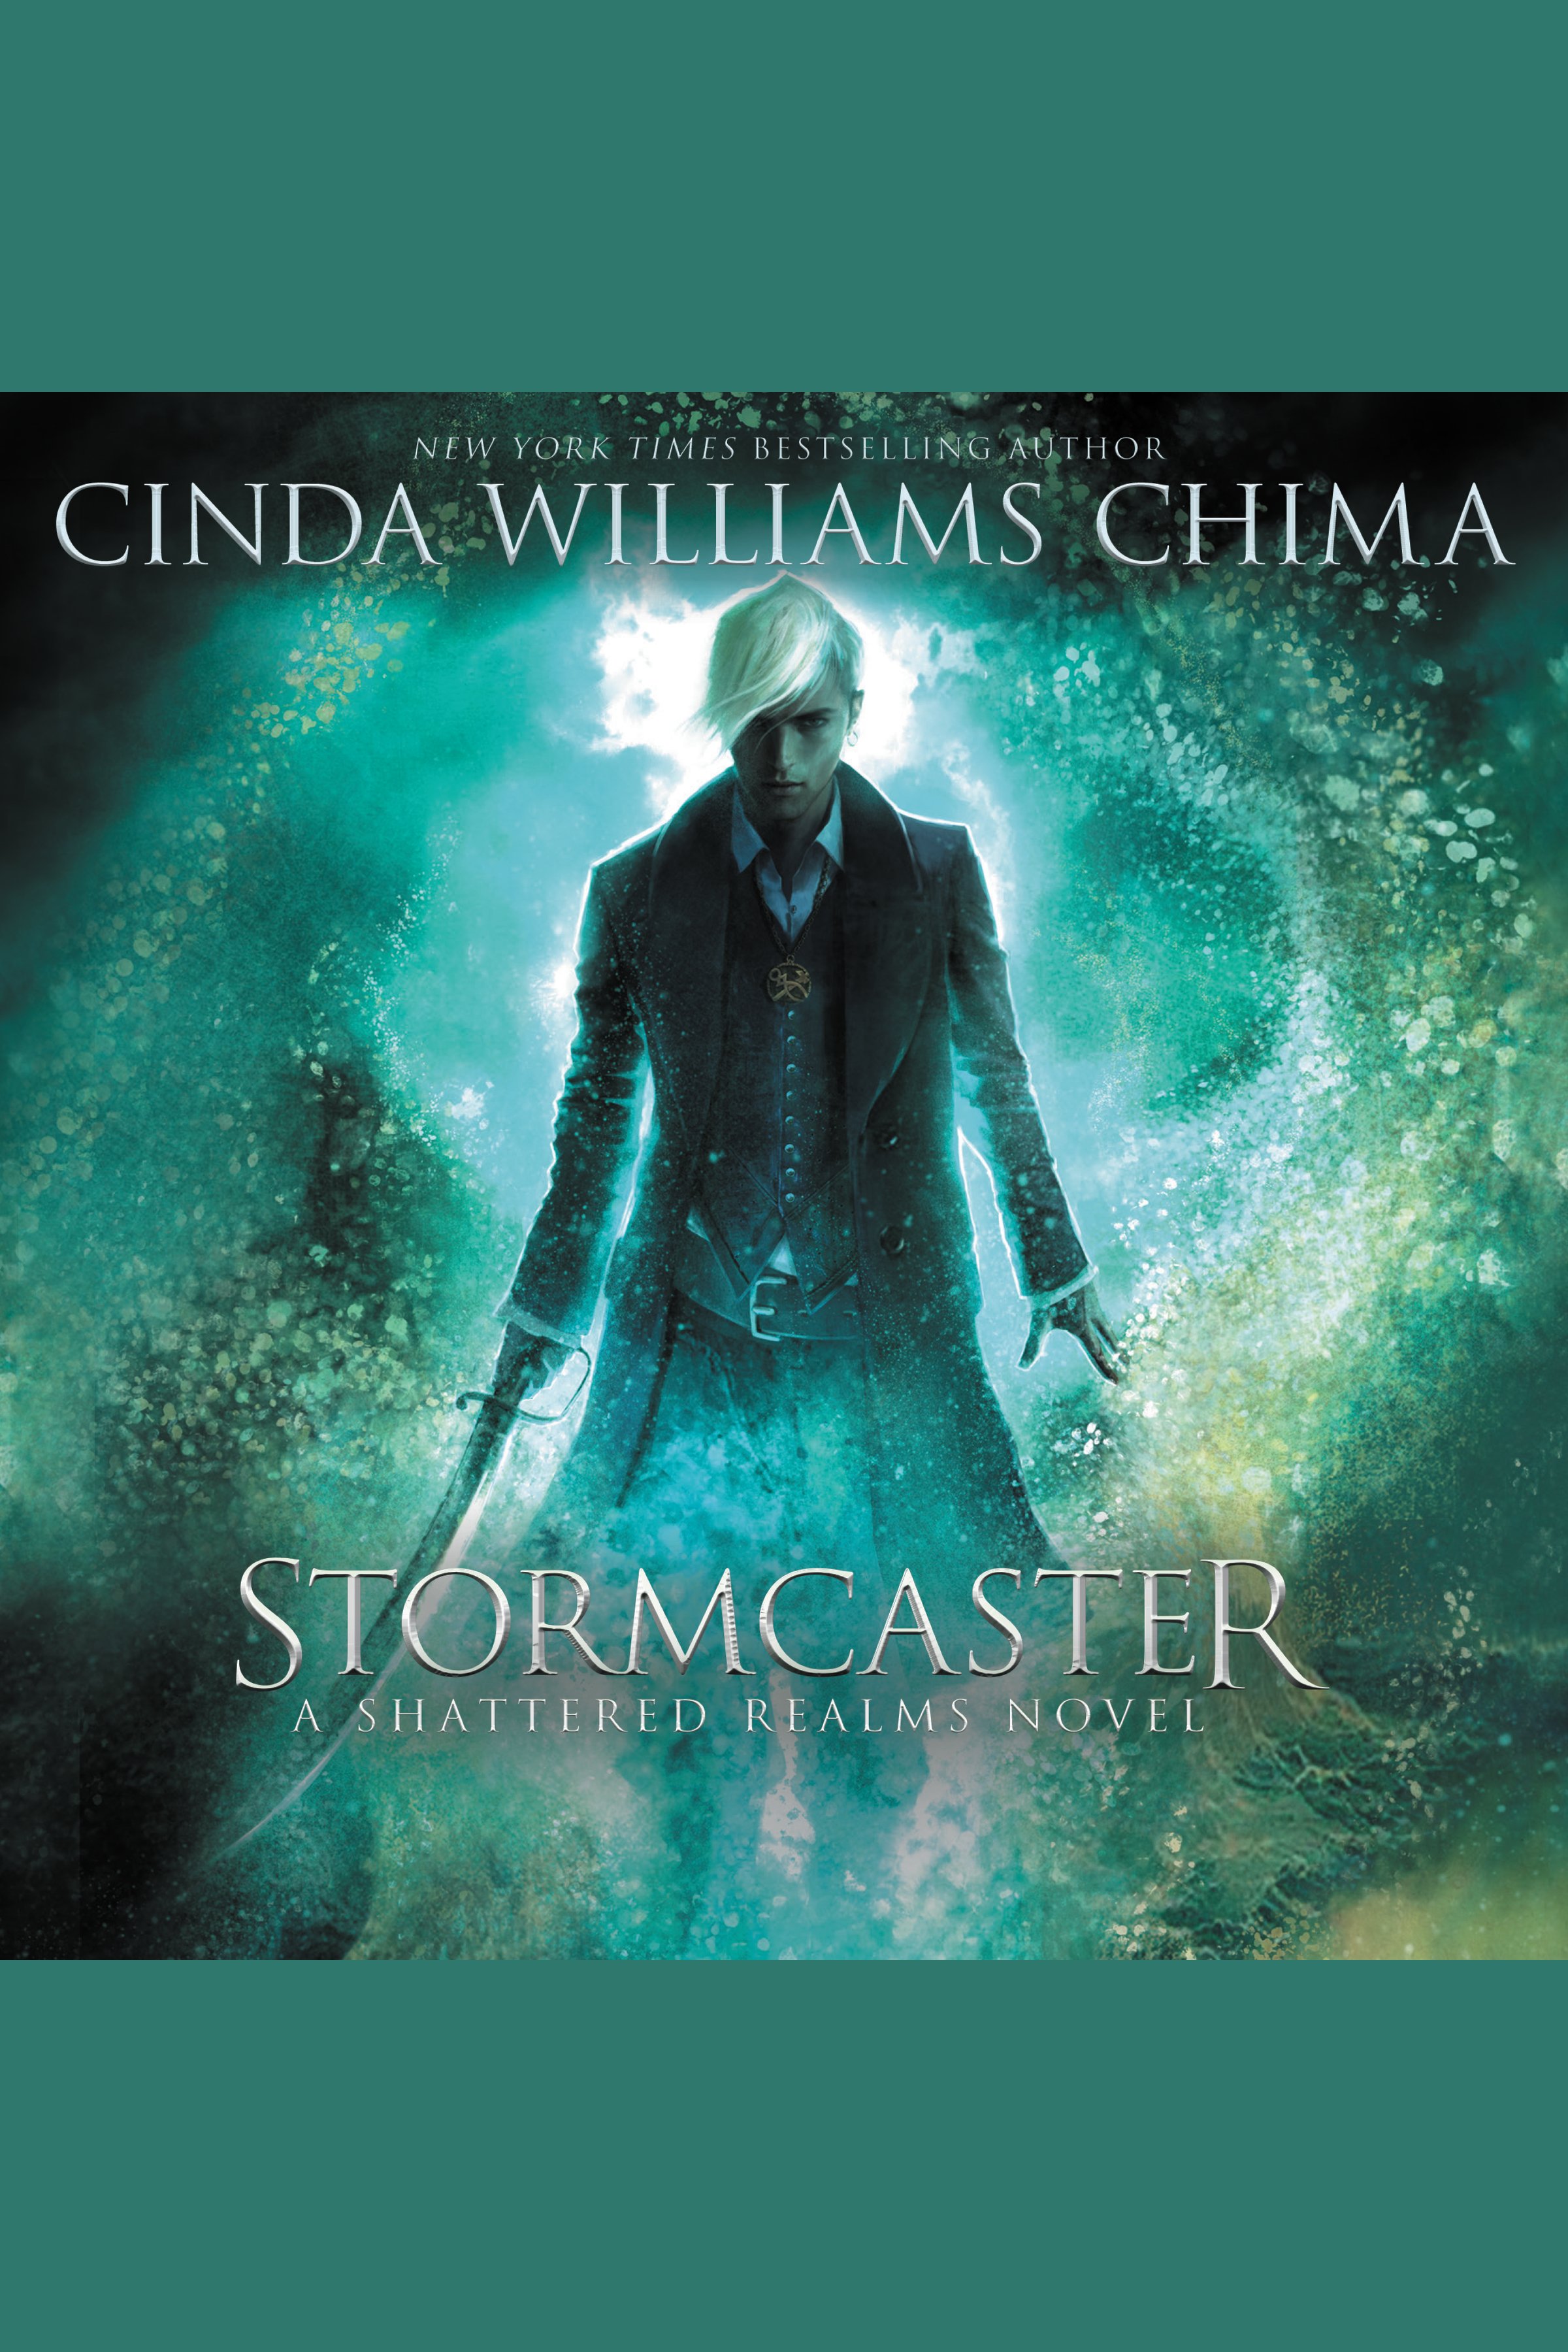 Stormcaster a shattered realms novel cover image